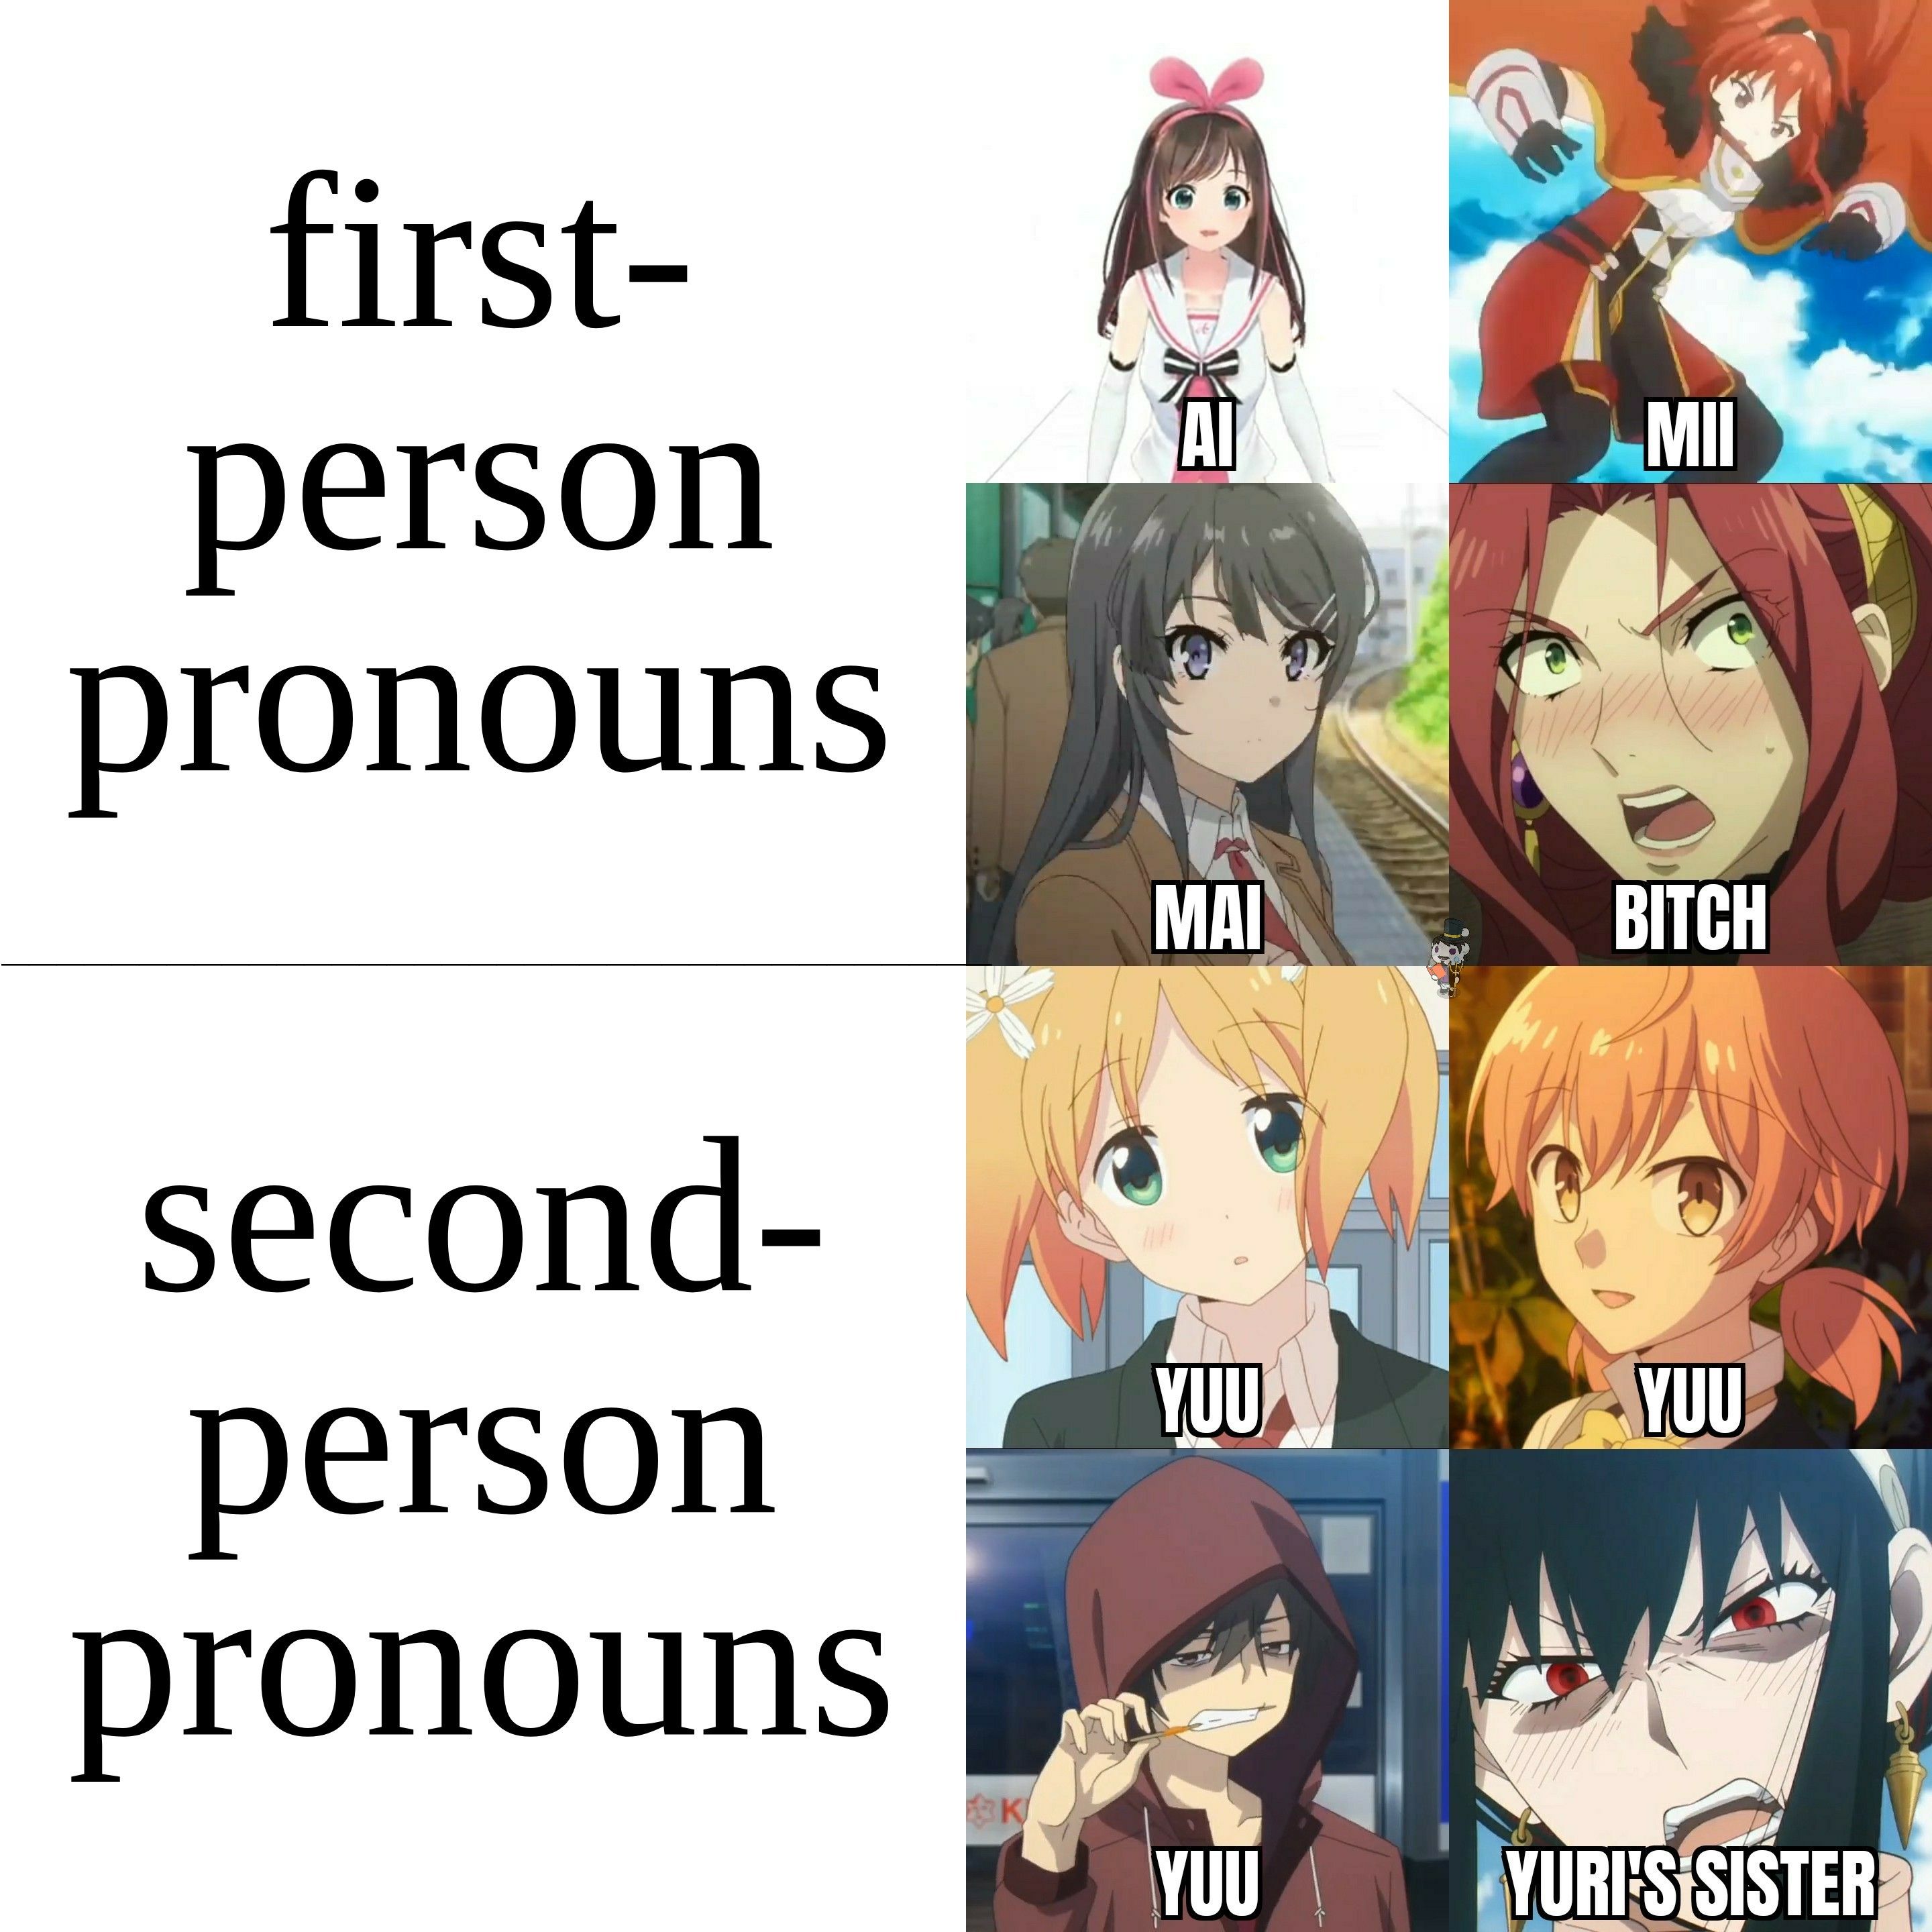 Pronouns'd the same way